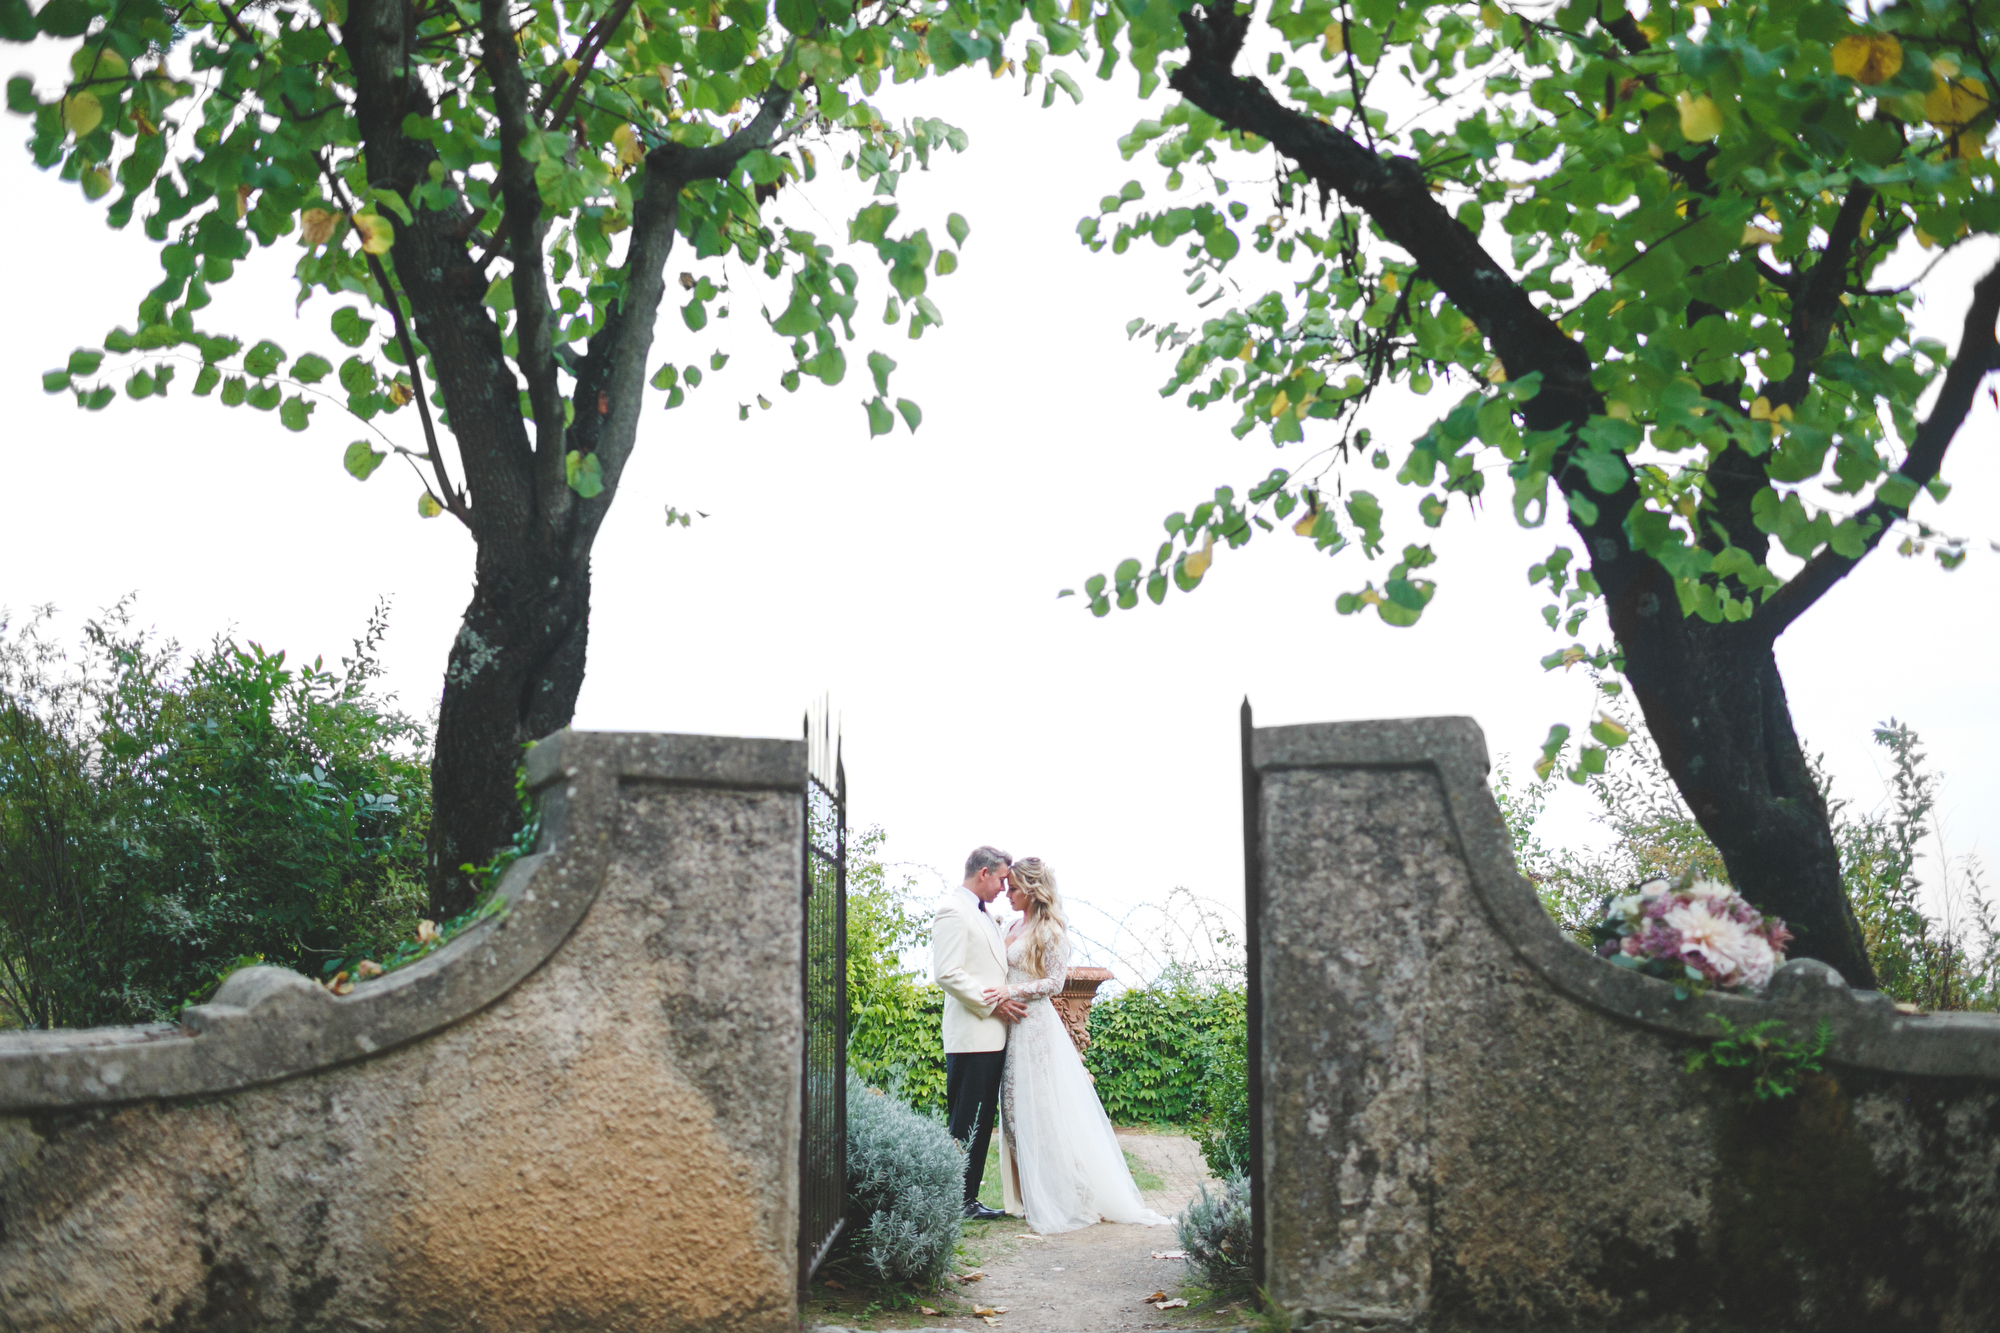 Dreamy Amalfi Coast Destination Wedding in Italy's Ravello photographed by Jennifer Skog